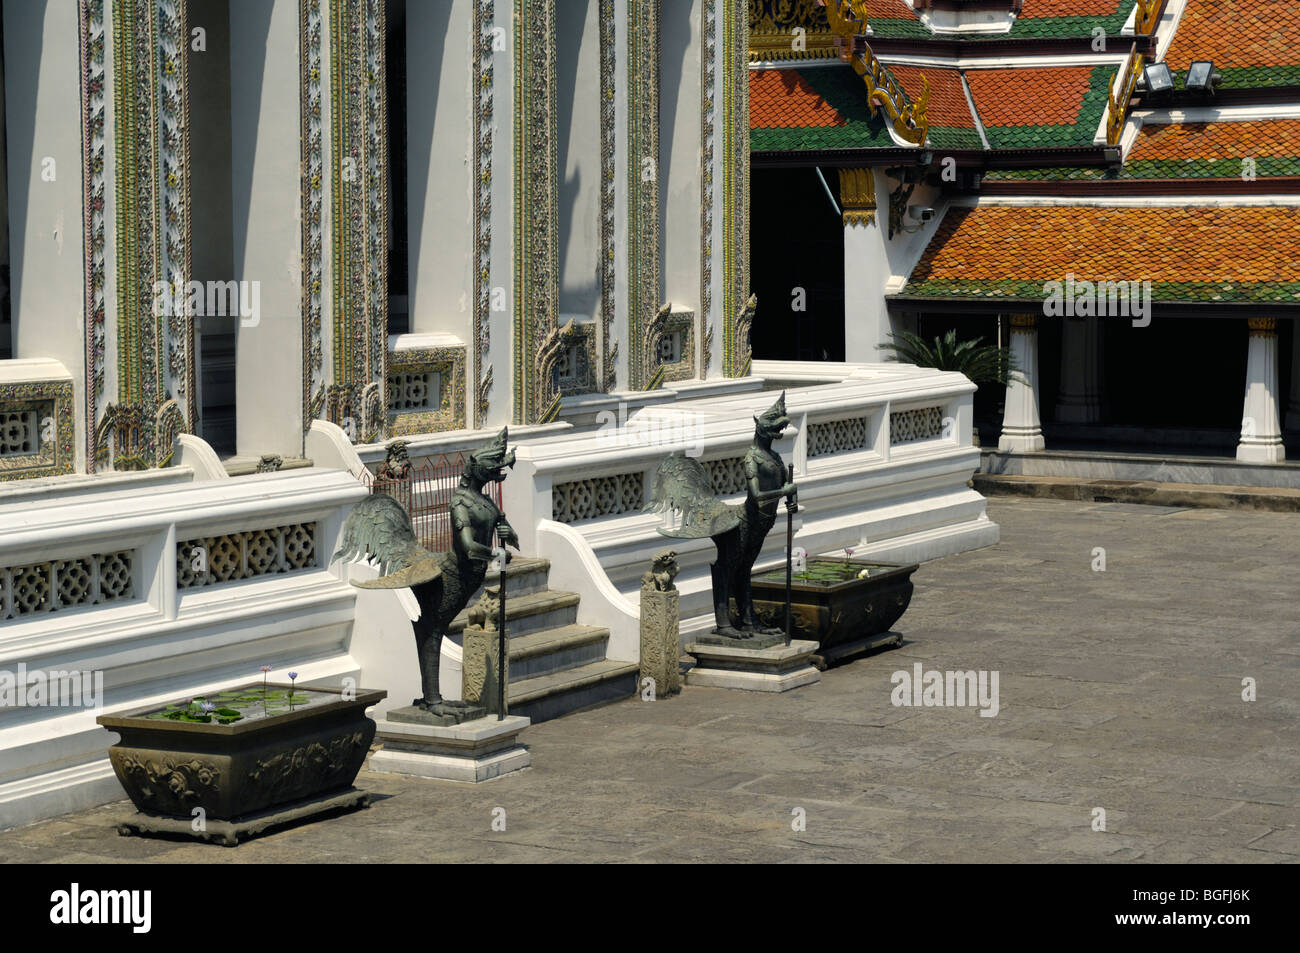 Coppia di Nok Tantima (Tantima uccelli) guardia del Viharn Yod, Phra Nakhon, il Grand Palace, Bangkok, Thailandia Foto Stock